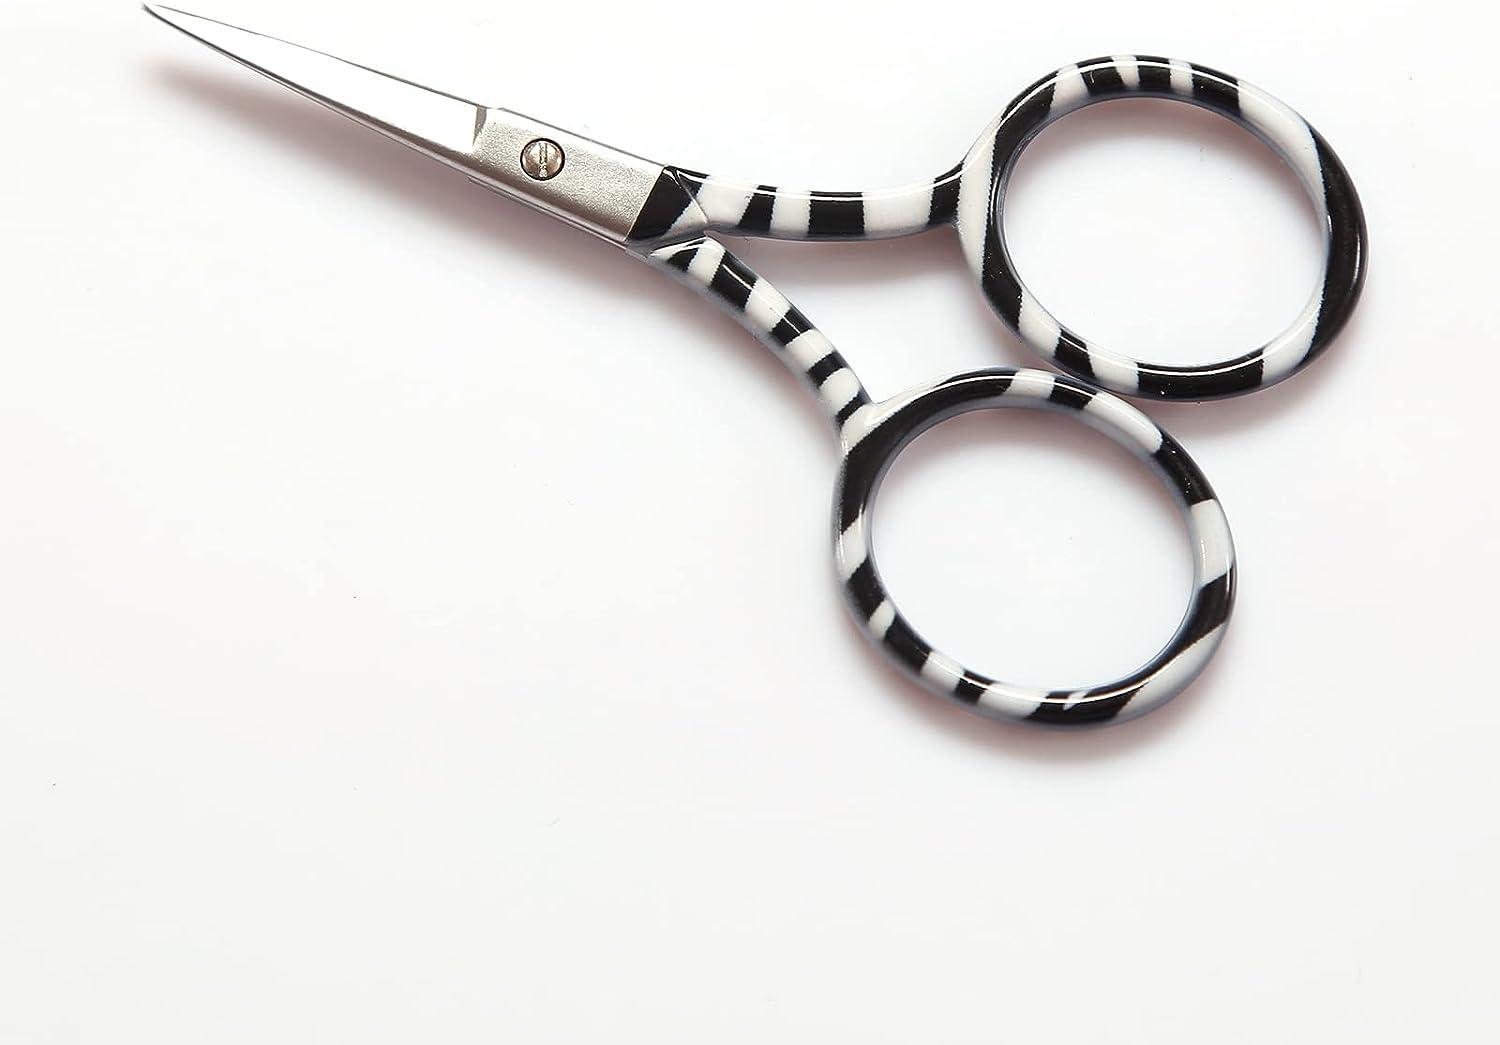 YJSStriving 3.5 Inch Small Scissors Beauty Eyebrow Trimmer Scissors Eyelash  Scissors for Eyebrow, Facail Hair, Eyelash, Hair Trimming Zebra-stripe